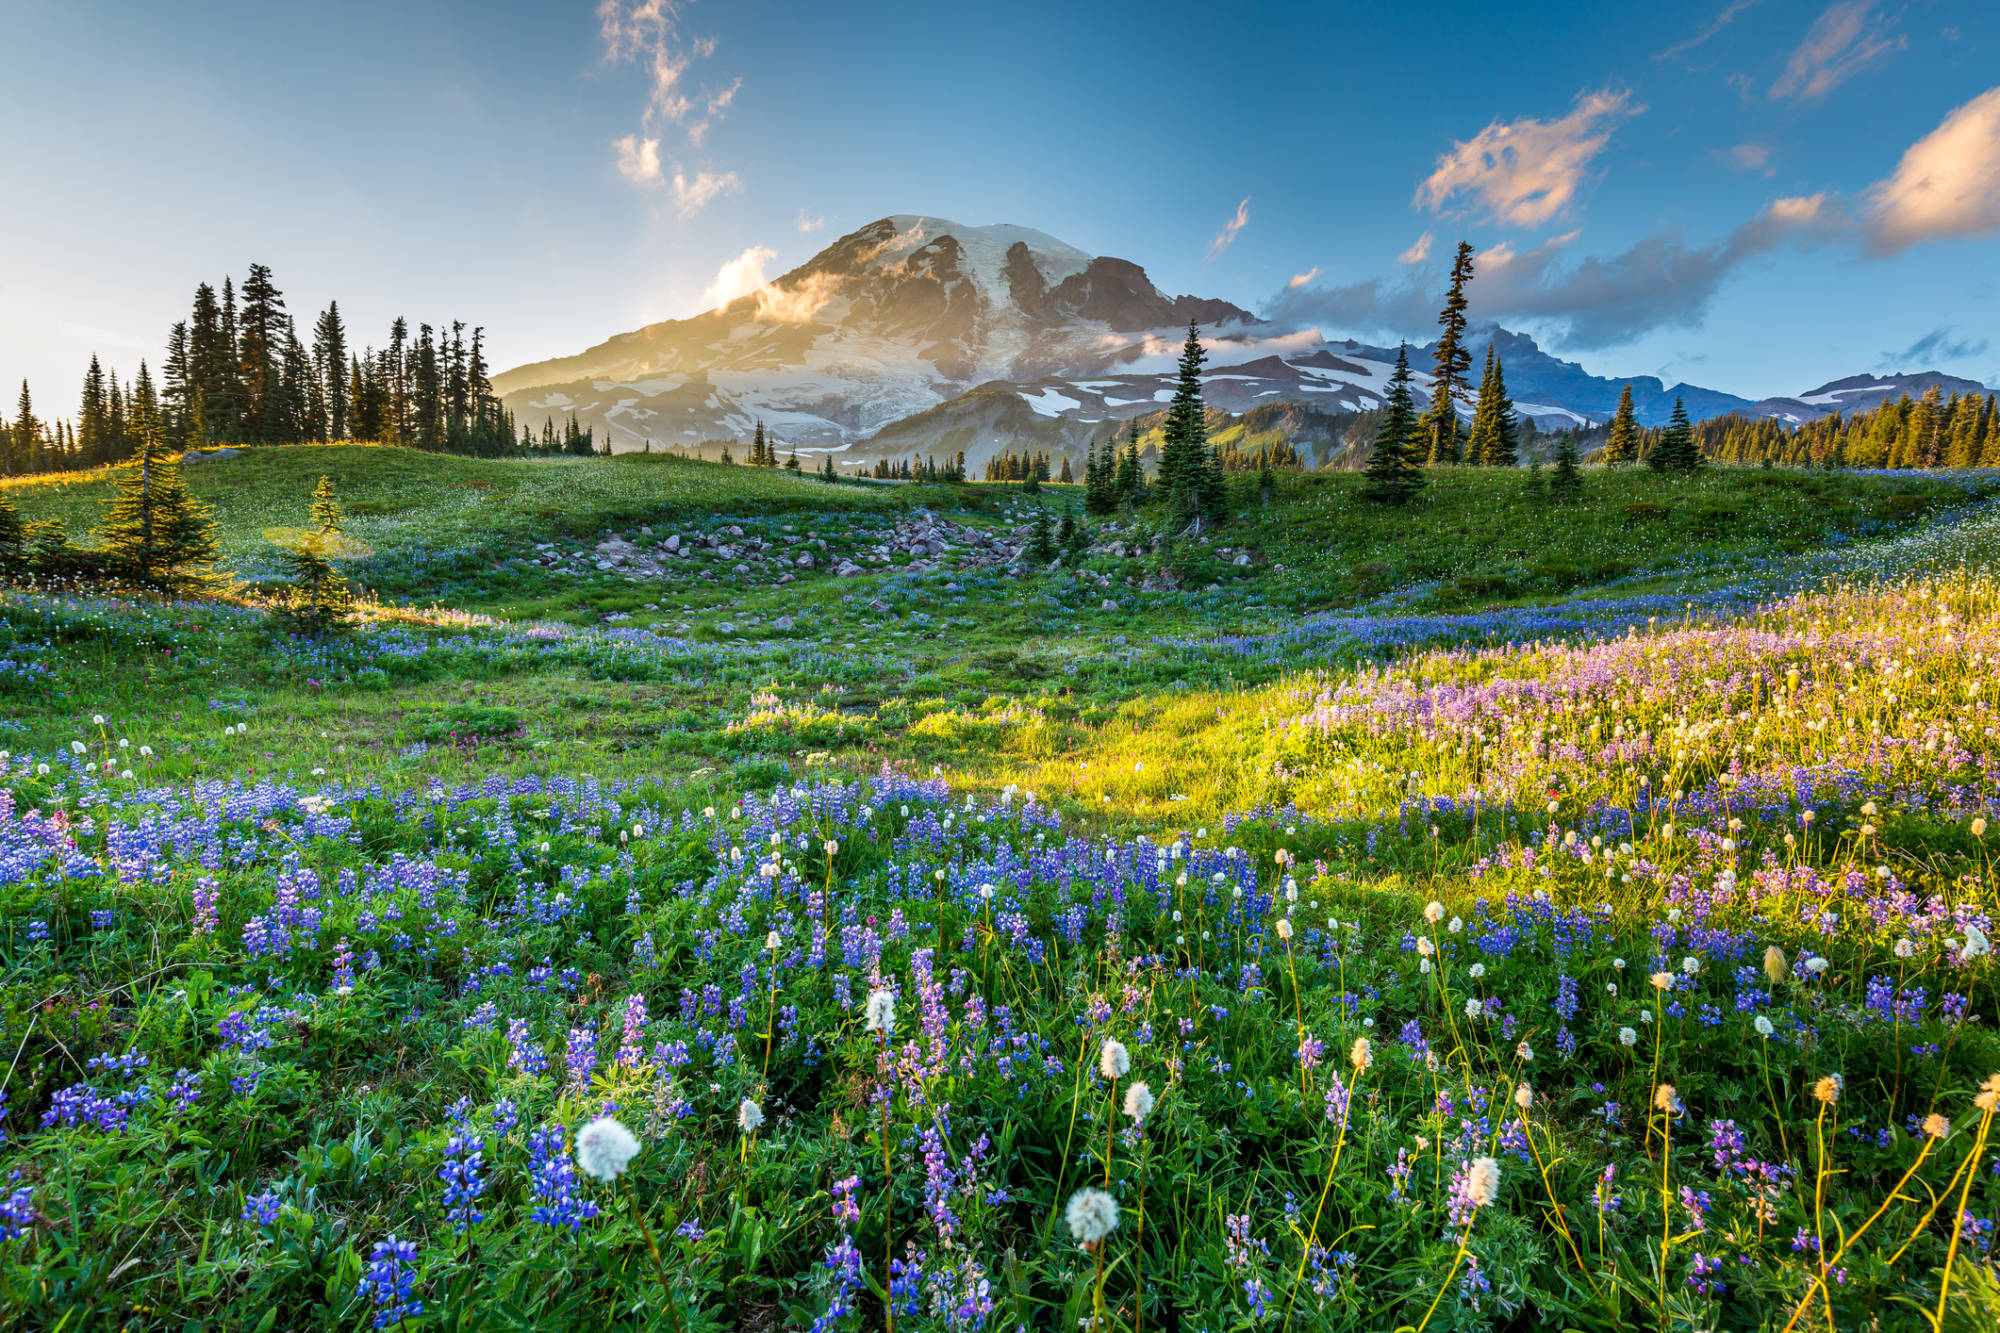 Explore Mount Rainier National Park, a short drive from Kent, Washington